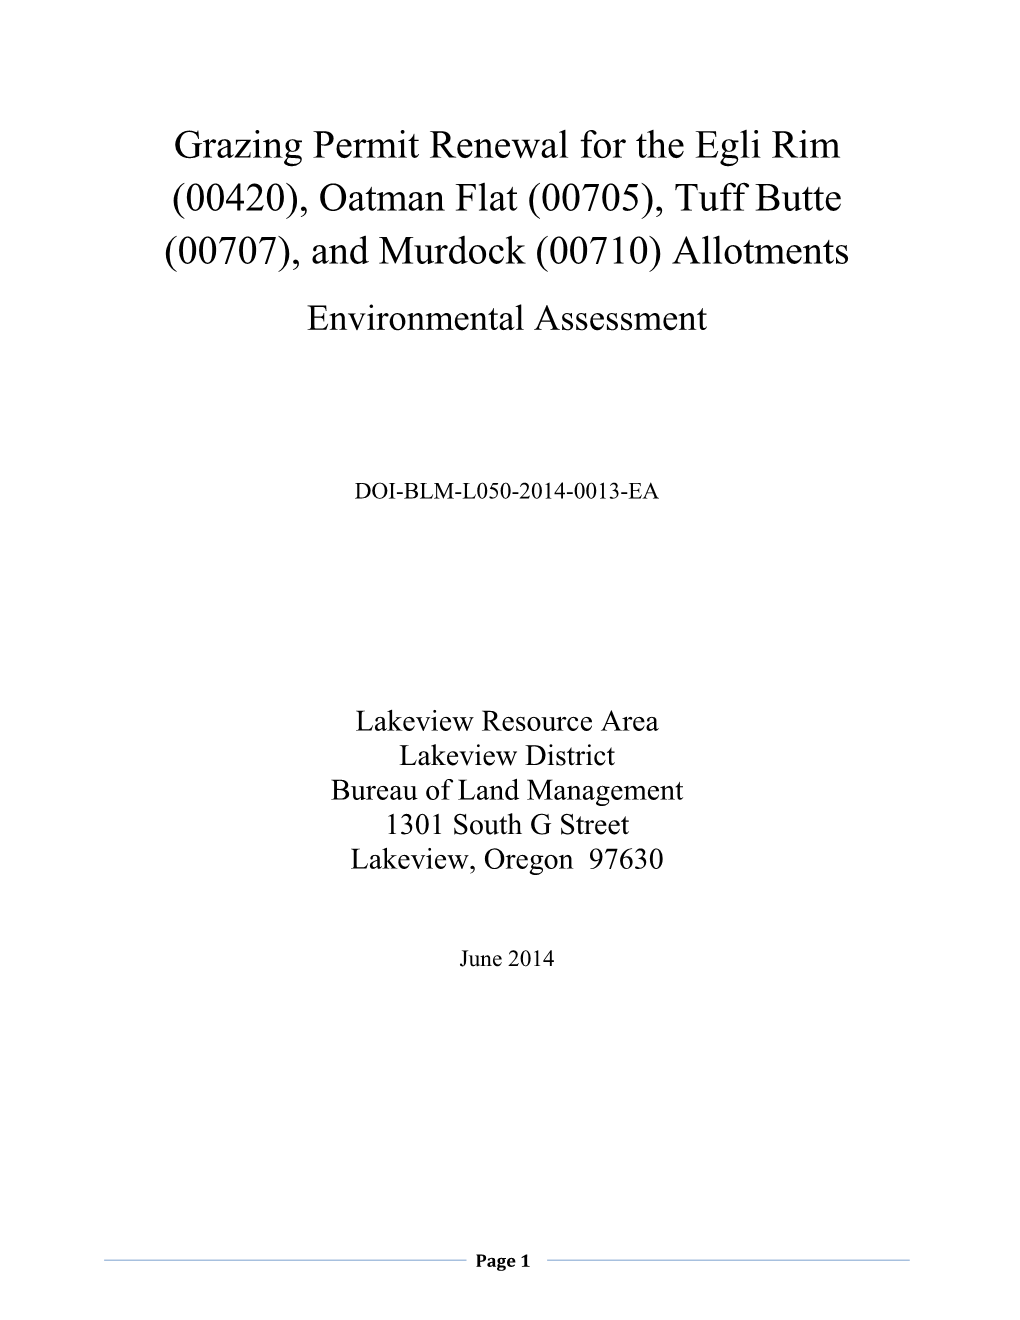 Grazing Permit Renewal for Egli Rim, Oatman Flat, Tuff Butte, And